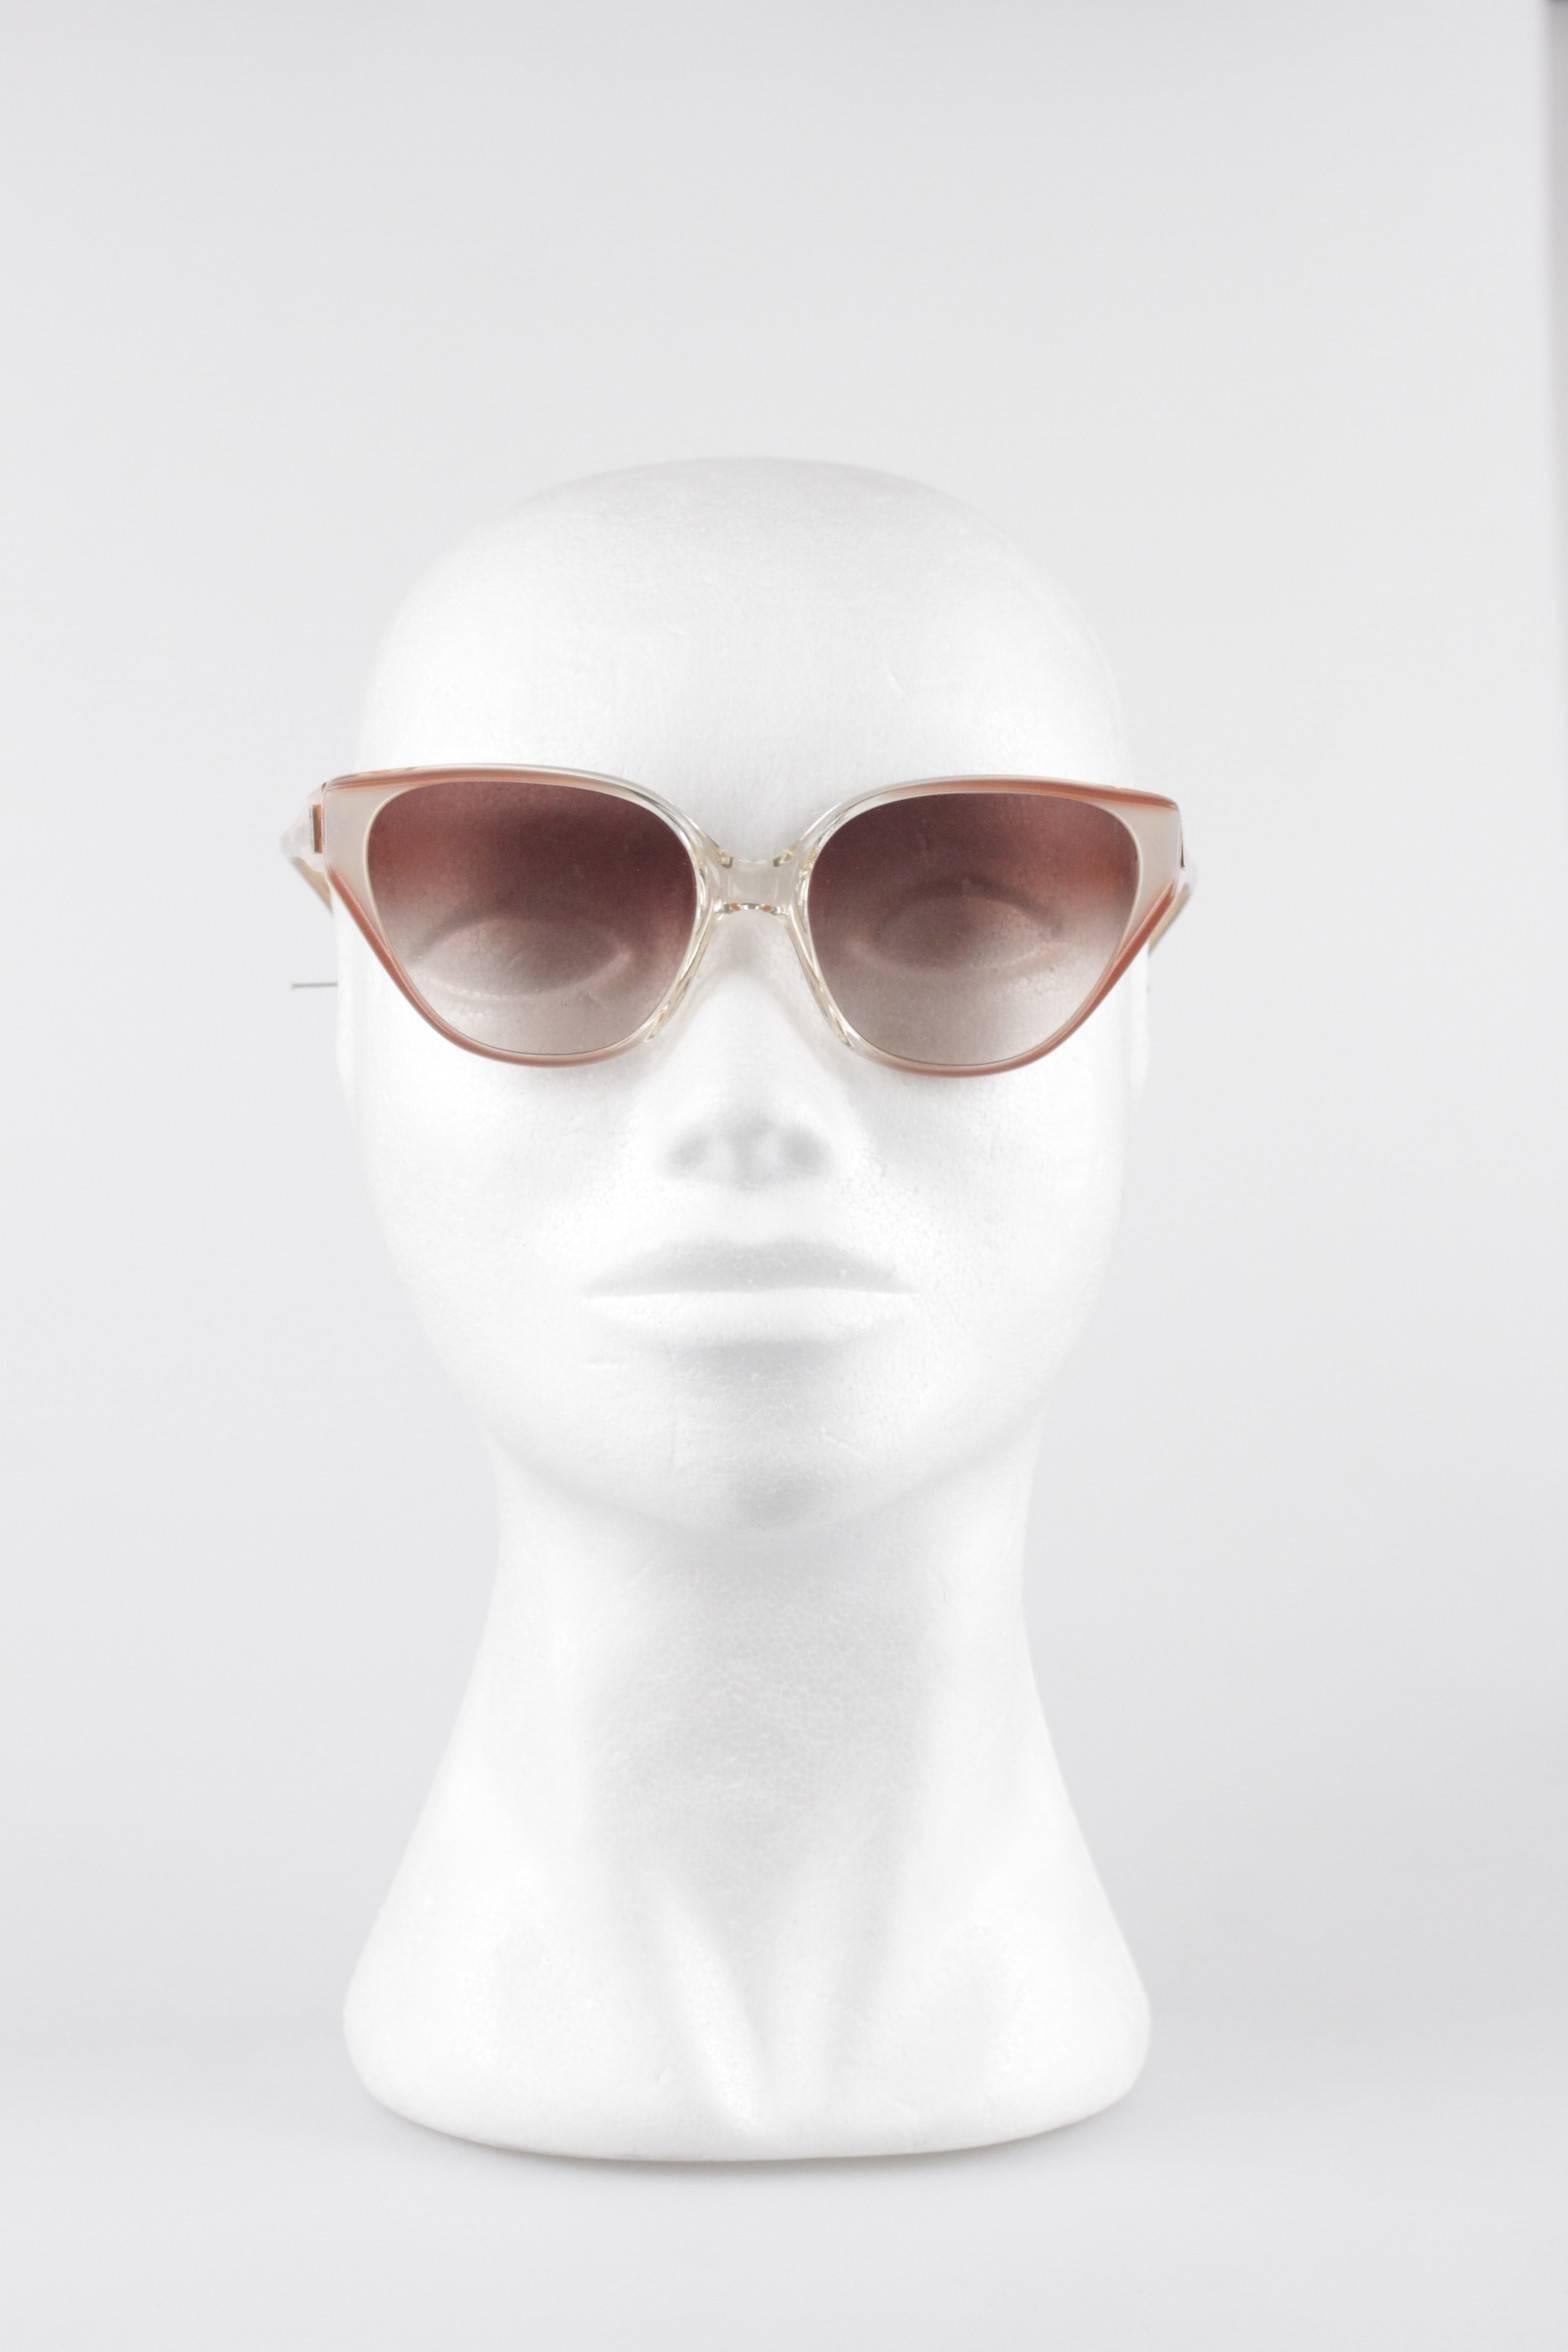 yves saint laurent sunglasses womens